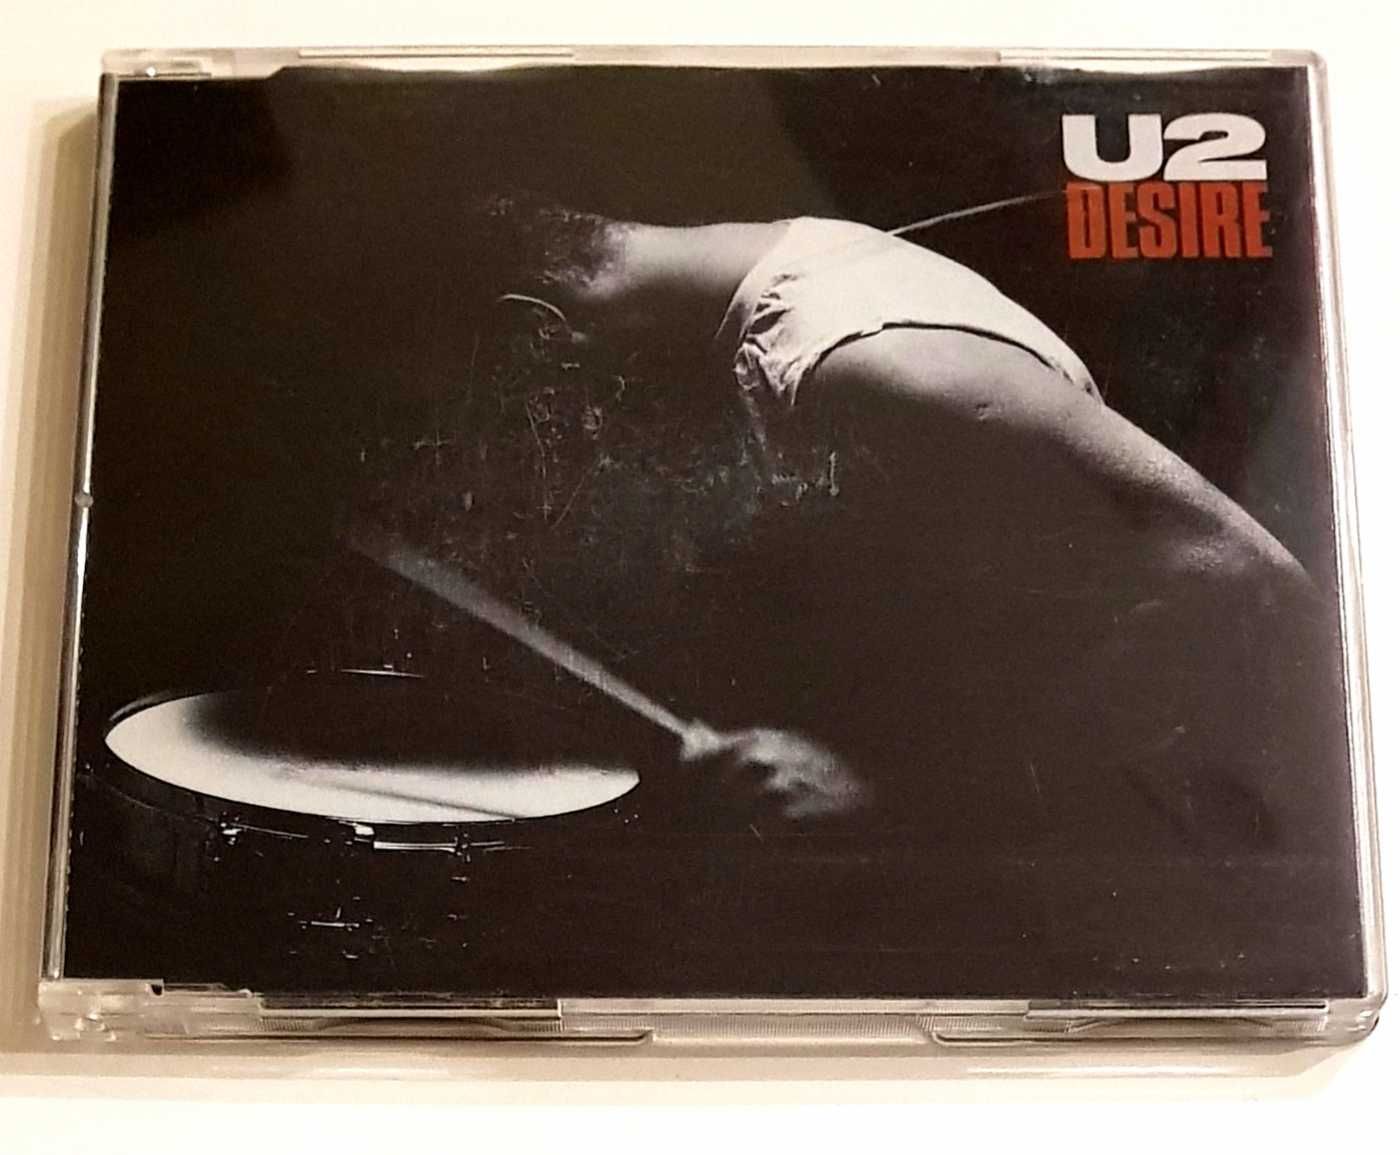 U2 - Desire CD single UK edition